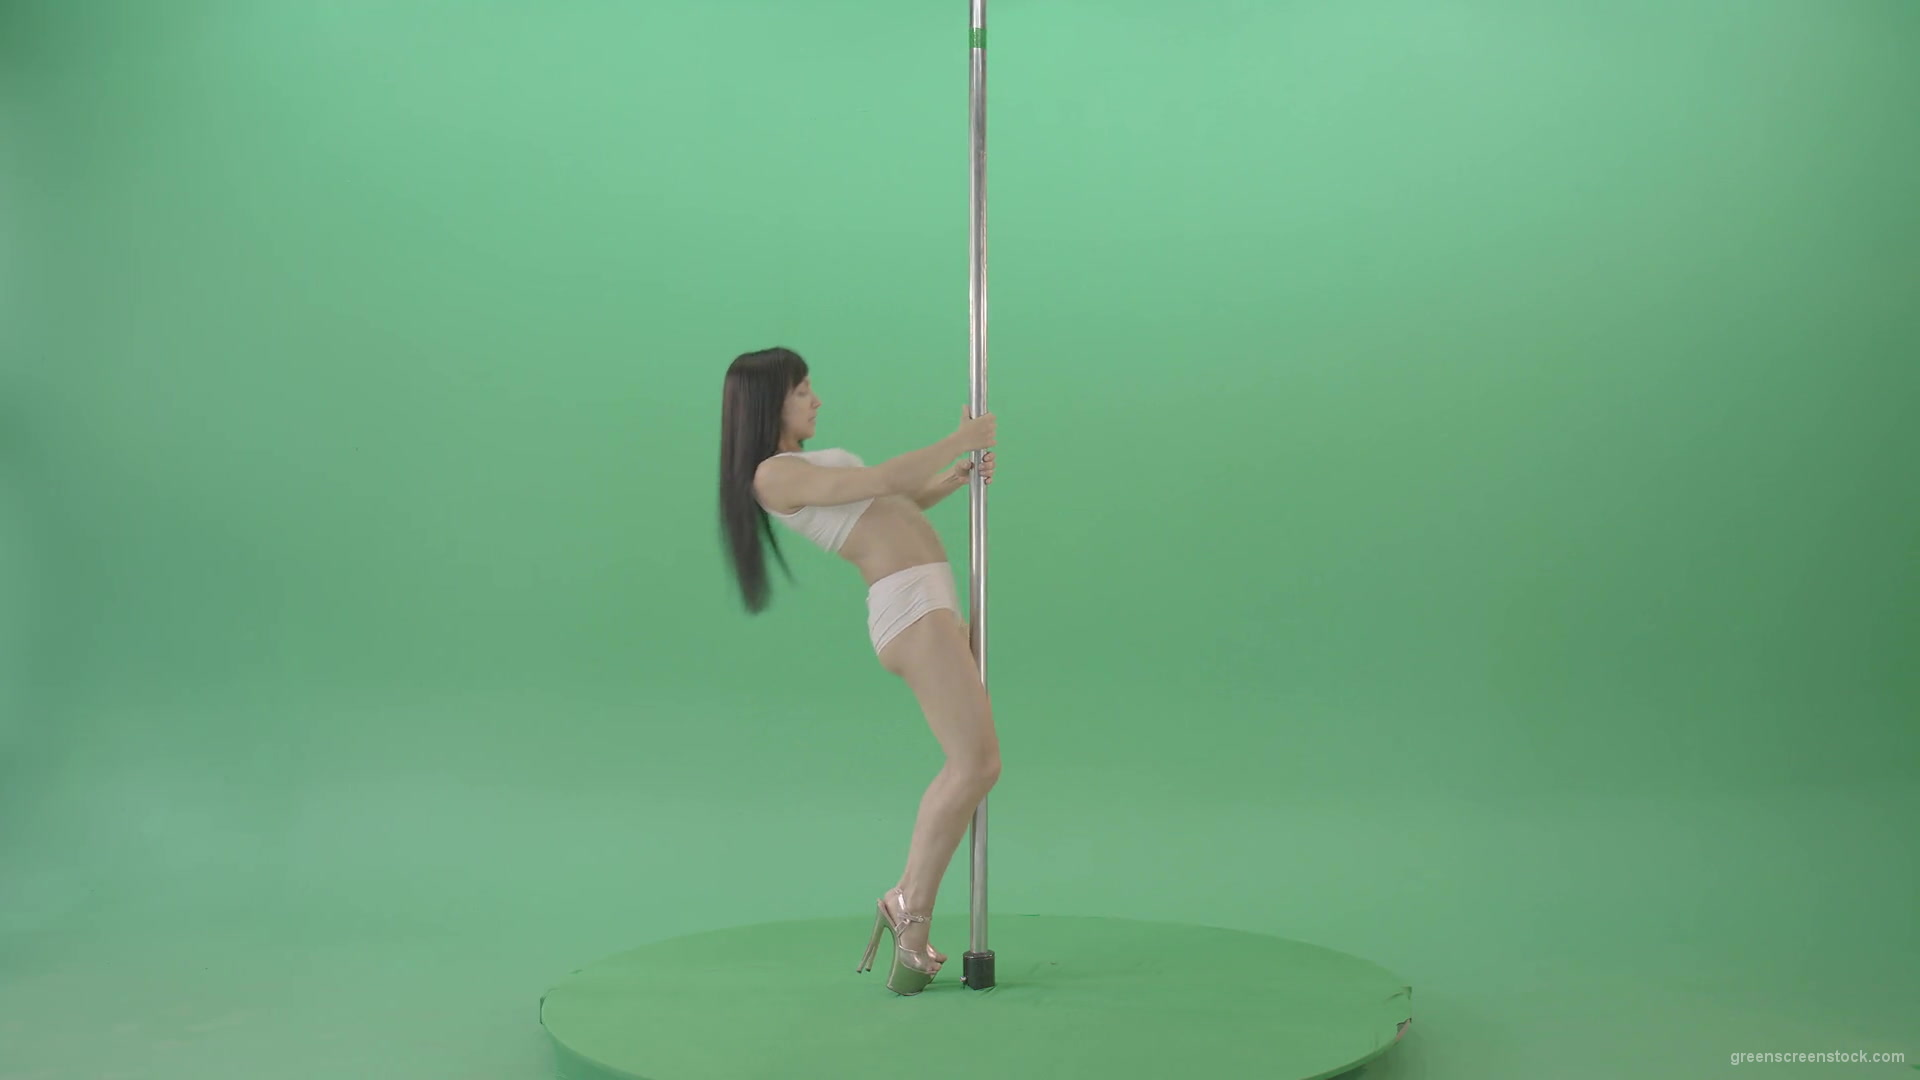 Pole-Dancing-Girl-waving-with-body-on-green-screen-4K-Video-Footage-1920_002 Green Screen Stock